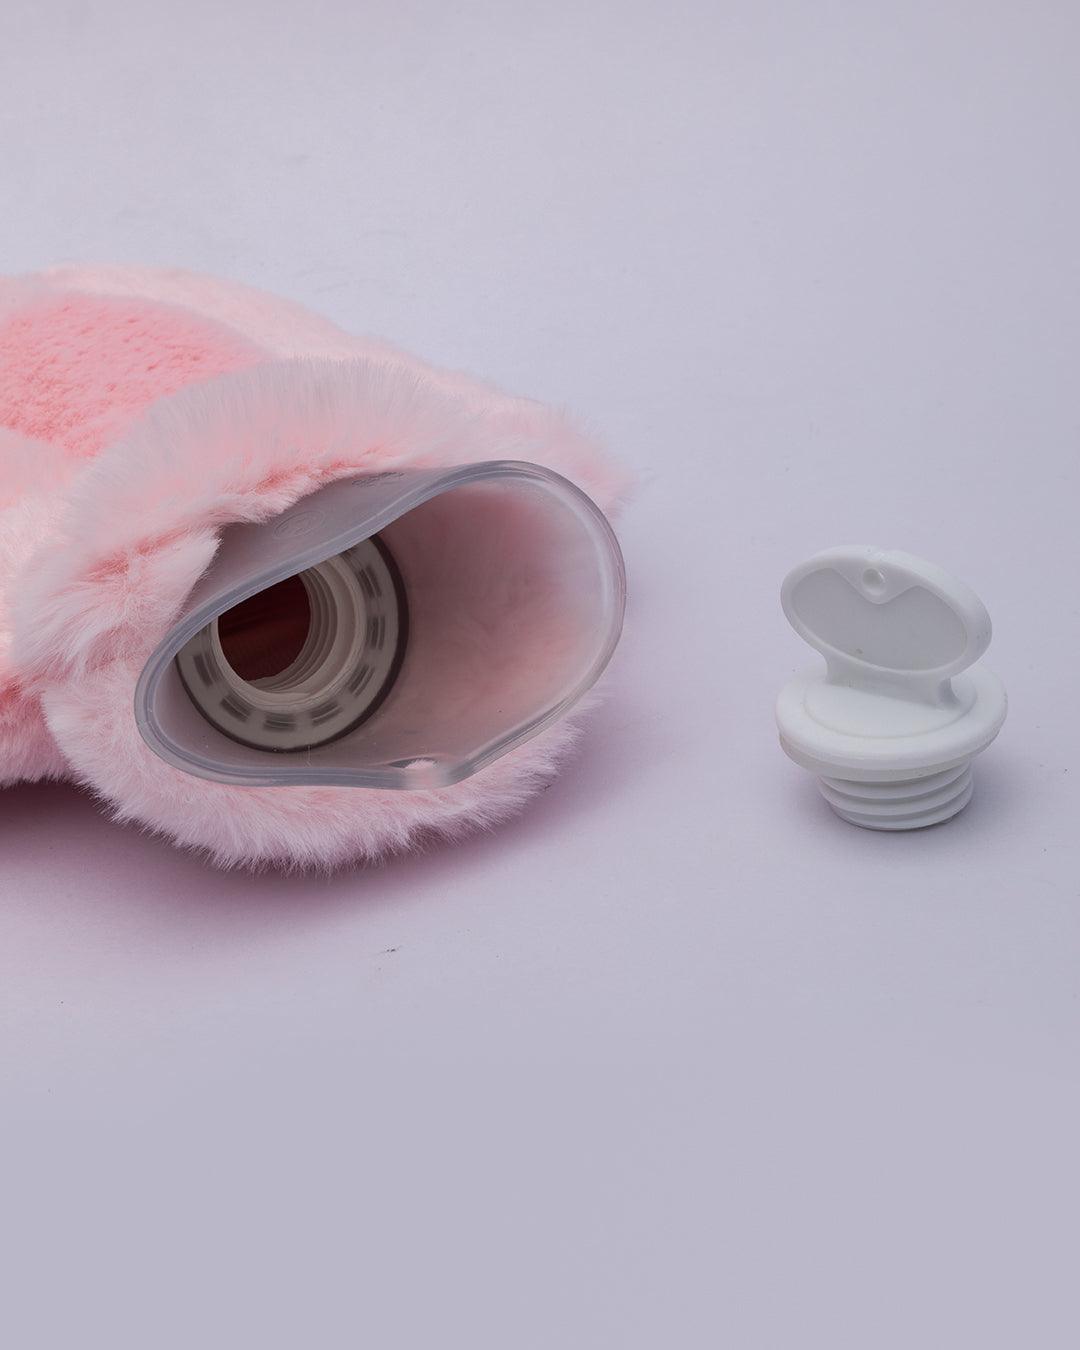 Hot Water Bag, for Pain Relief, Bunny Shaped Design, Pink, Fleece, 850 mL - MARKET 99